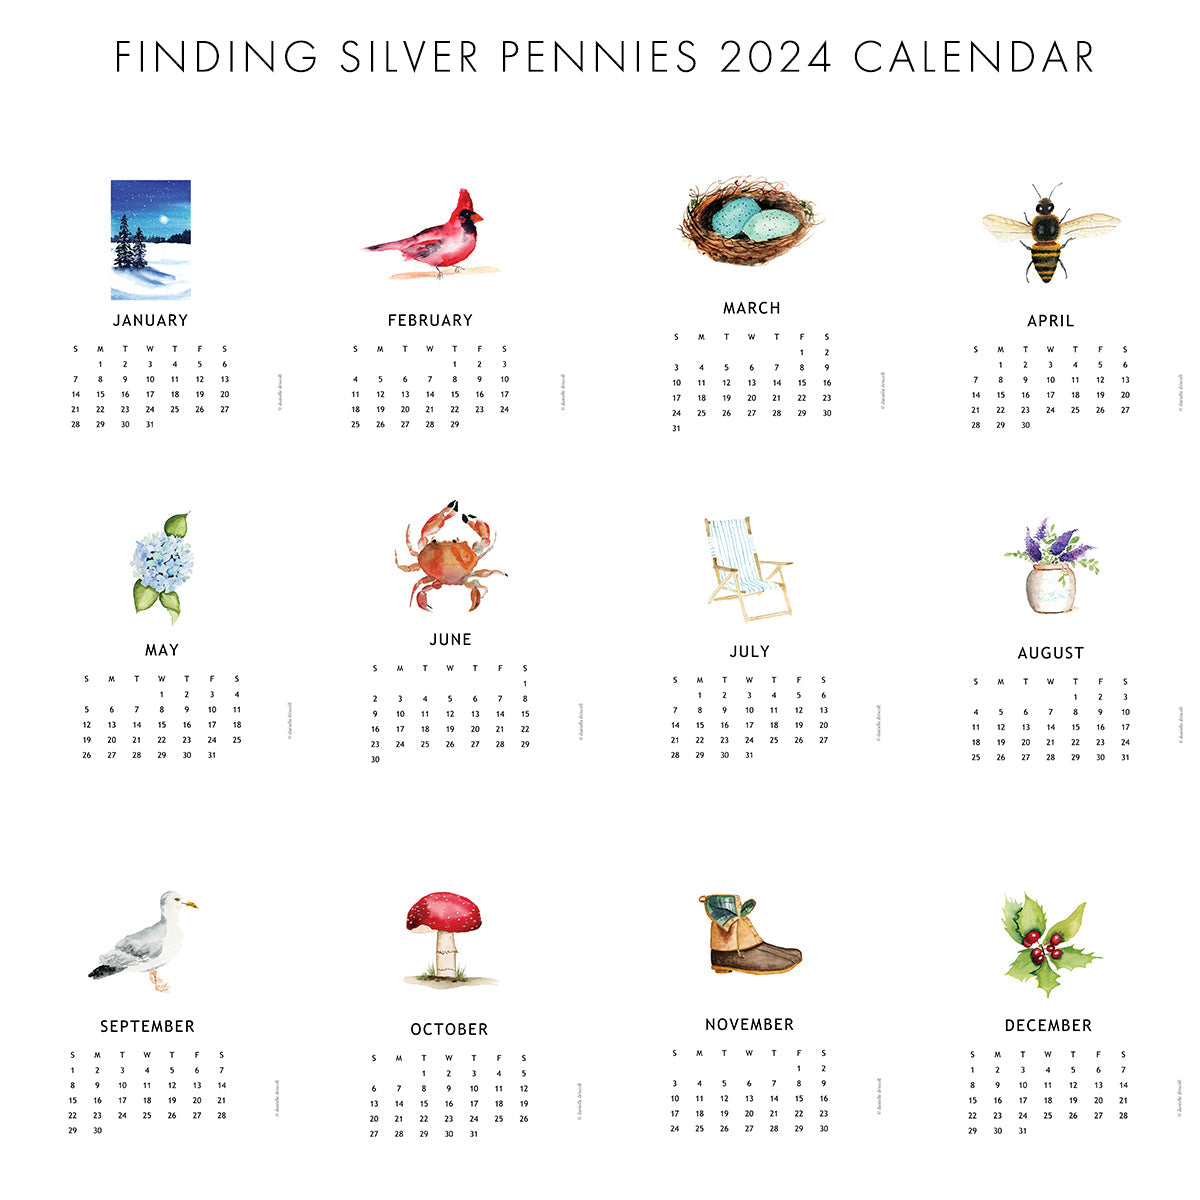 2024 Watercolor Desk Calendar Refill Pack | Finding Silver Pennies